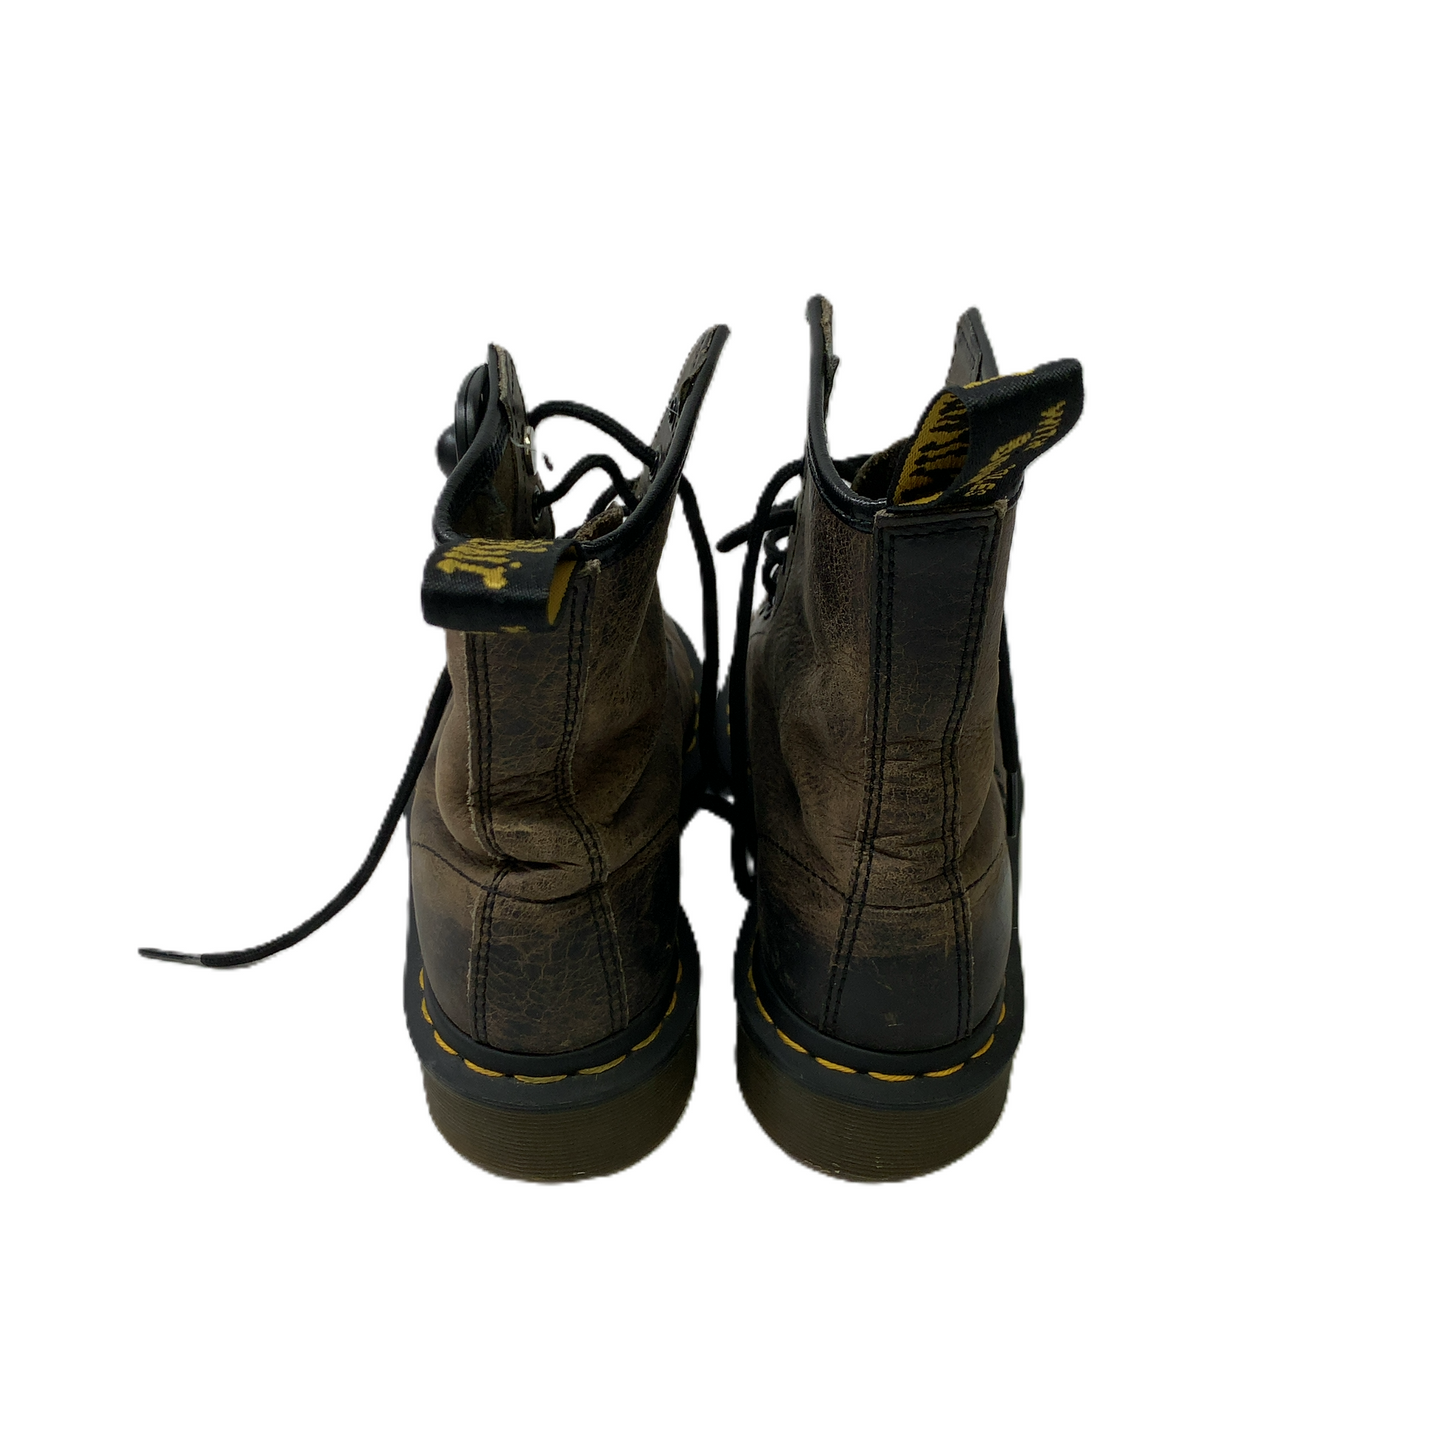 Boots Designer By Dr Martens  Size: 5